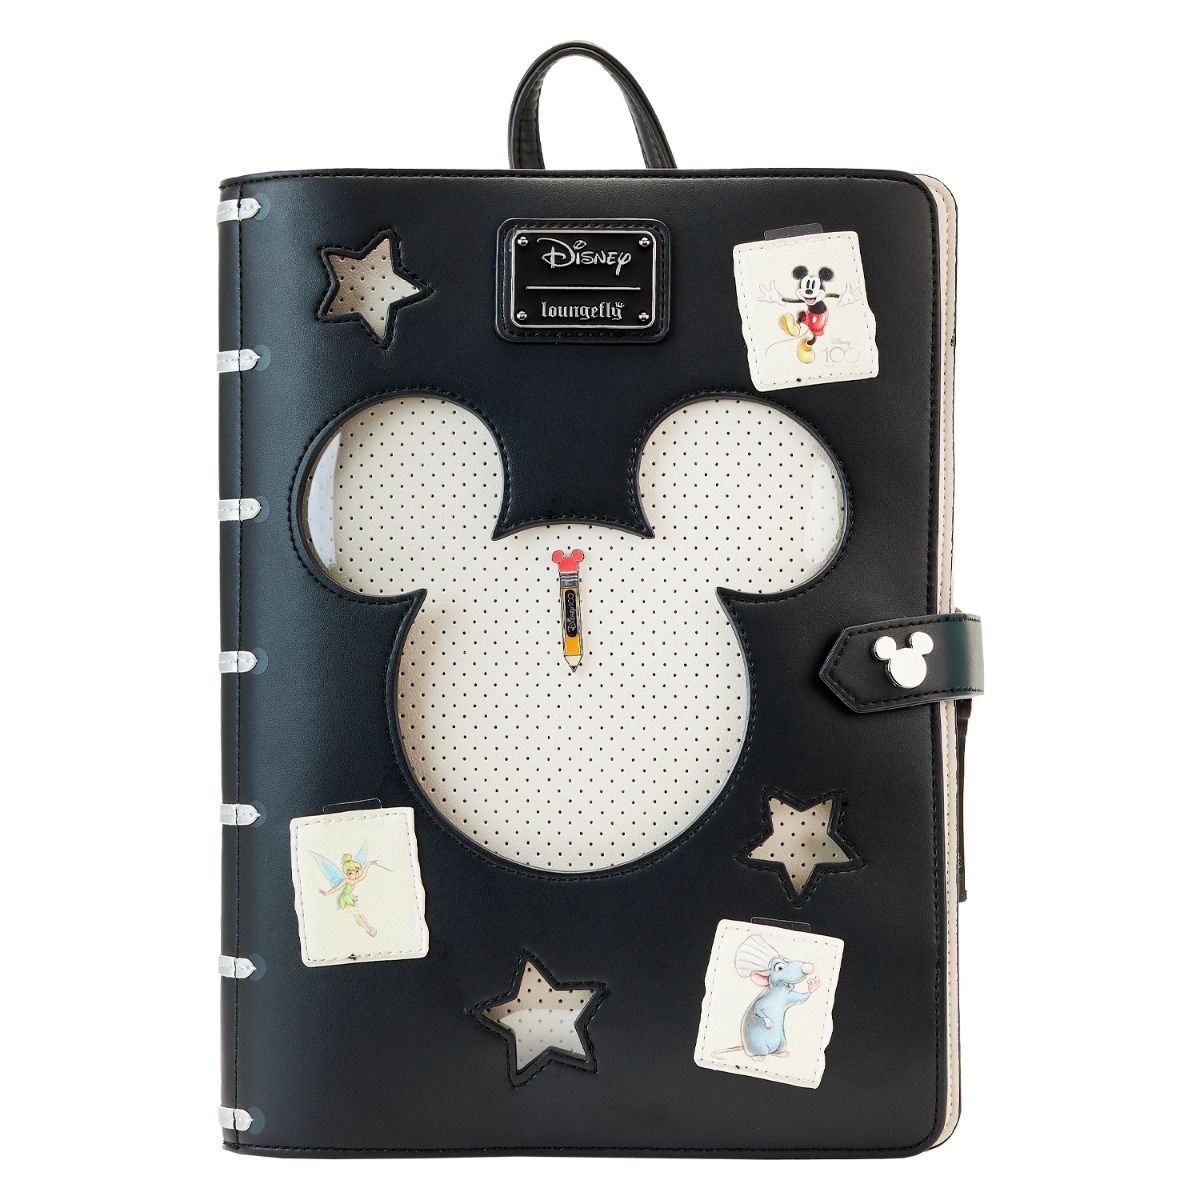 Disney Sleeping Beauty Pin Trader Backpack at Loungefly - Disney